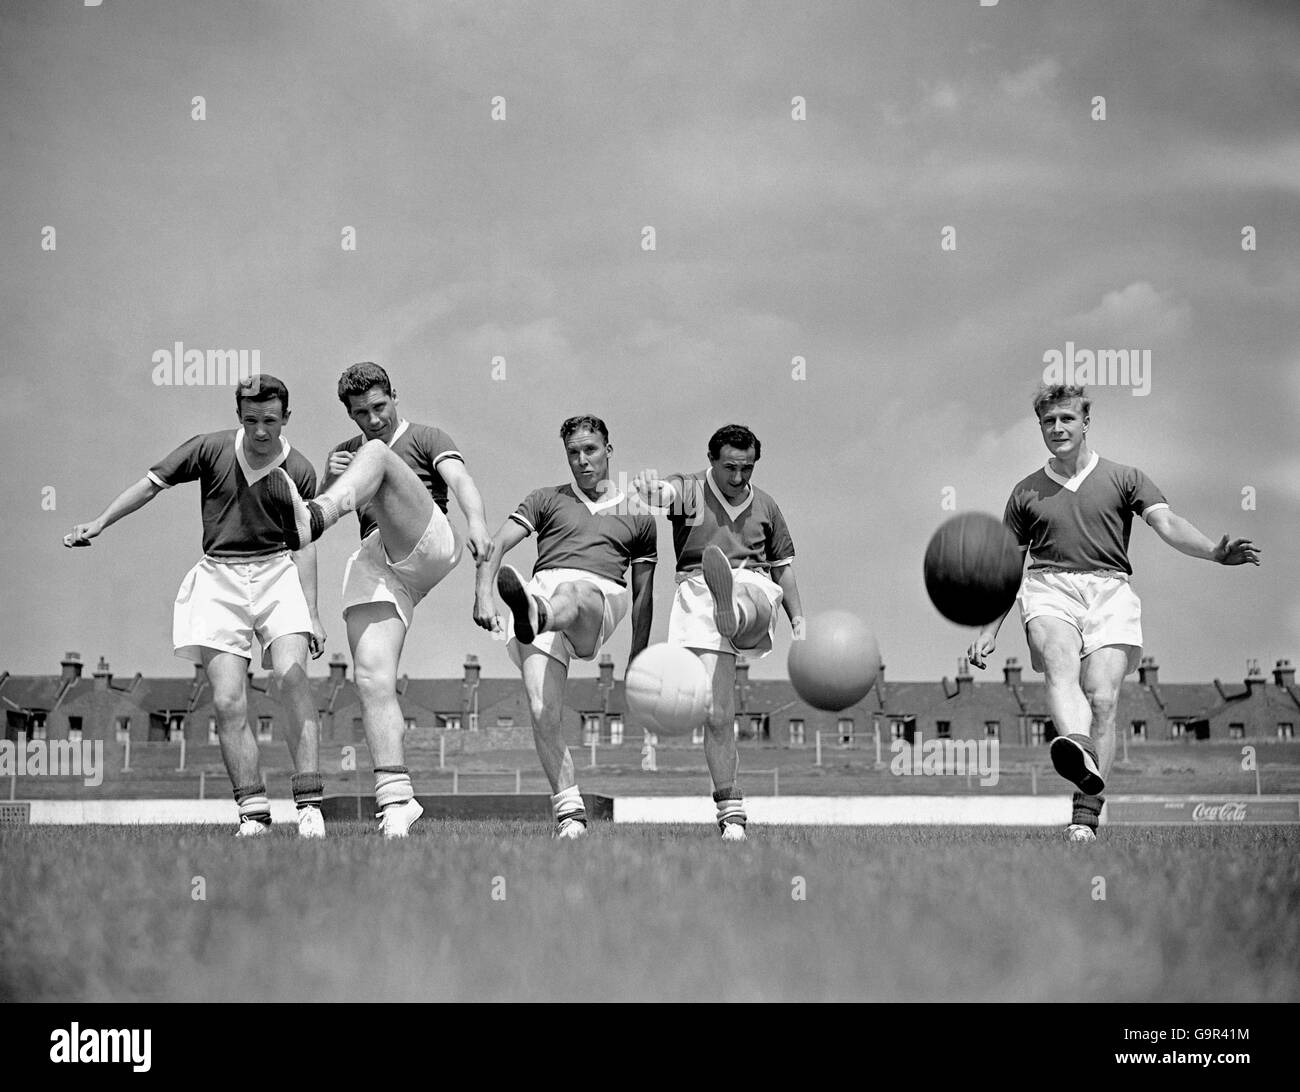 Soccer - Leyton Orient Photocall Stock Photo